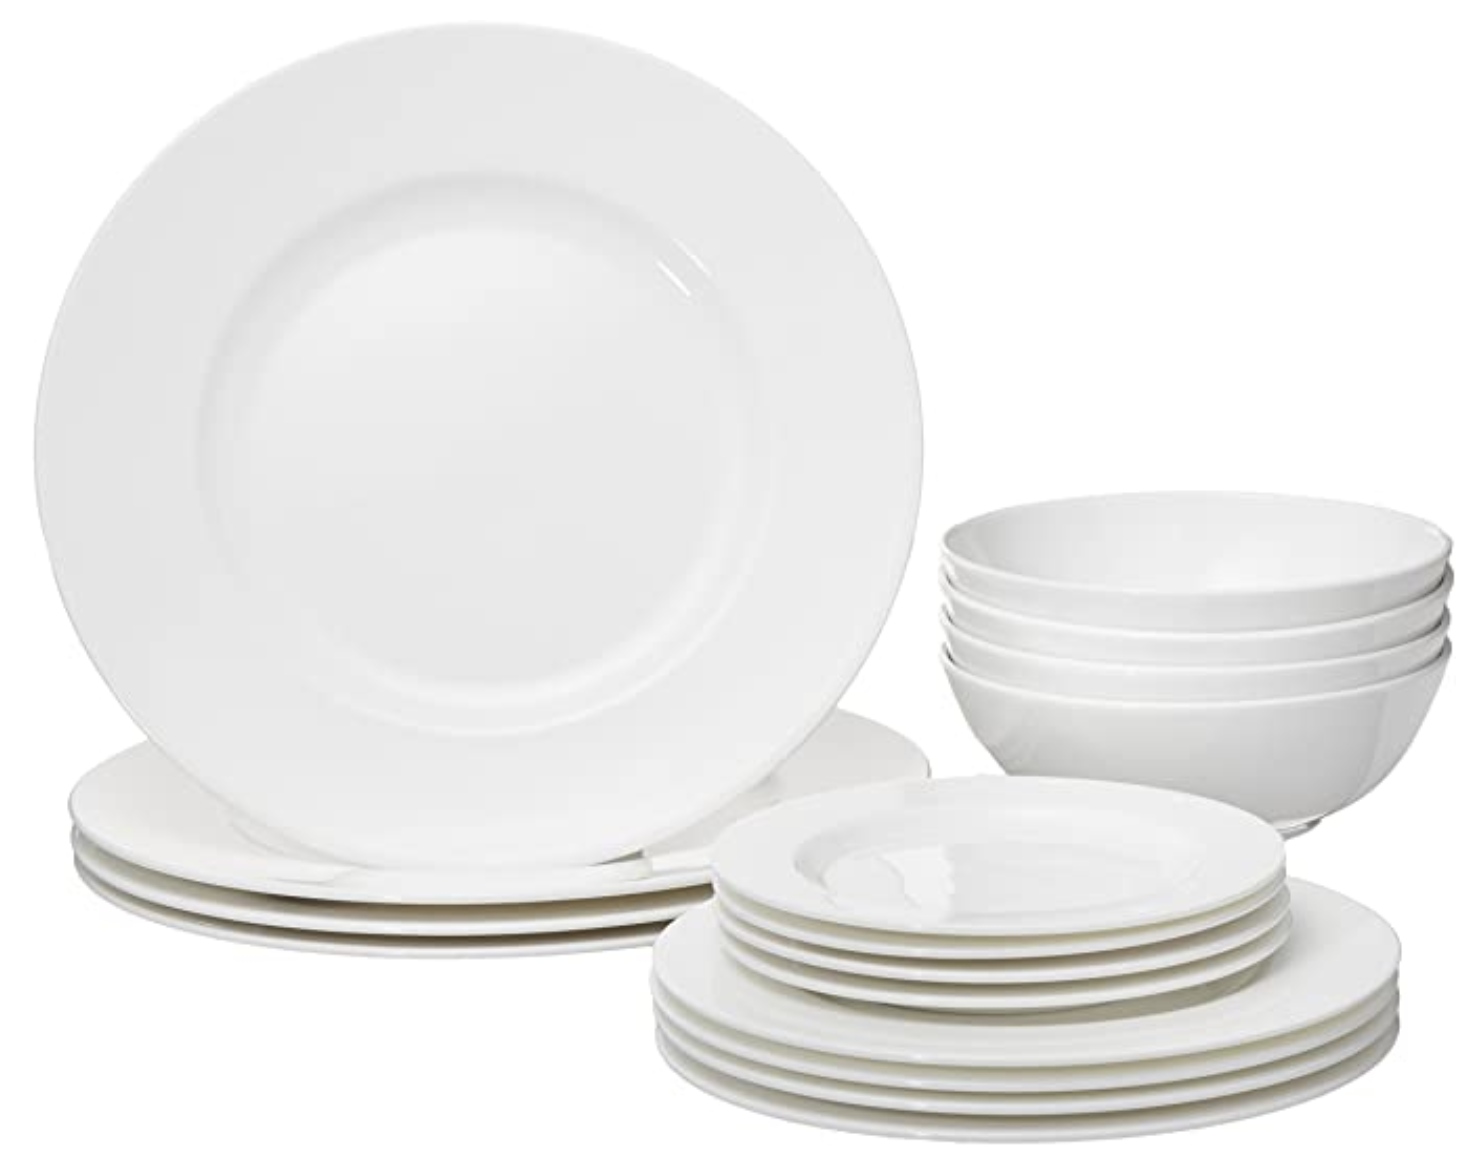 2). Lenox Classic White 16-Piece Dinnerware Set. 